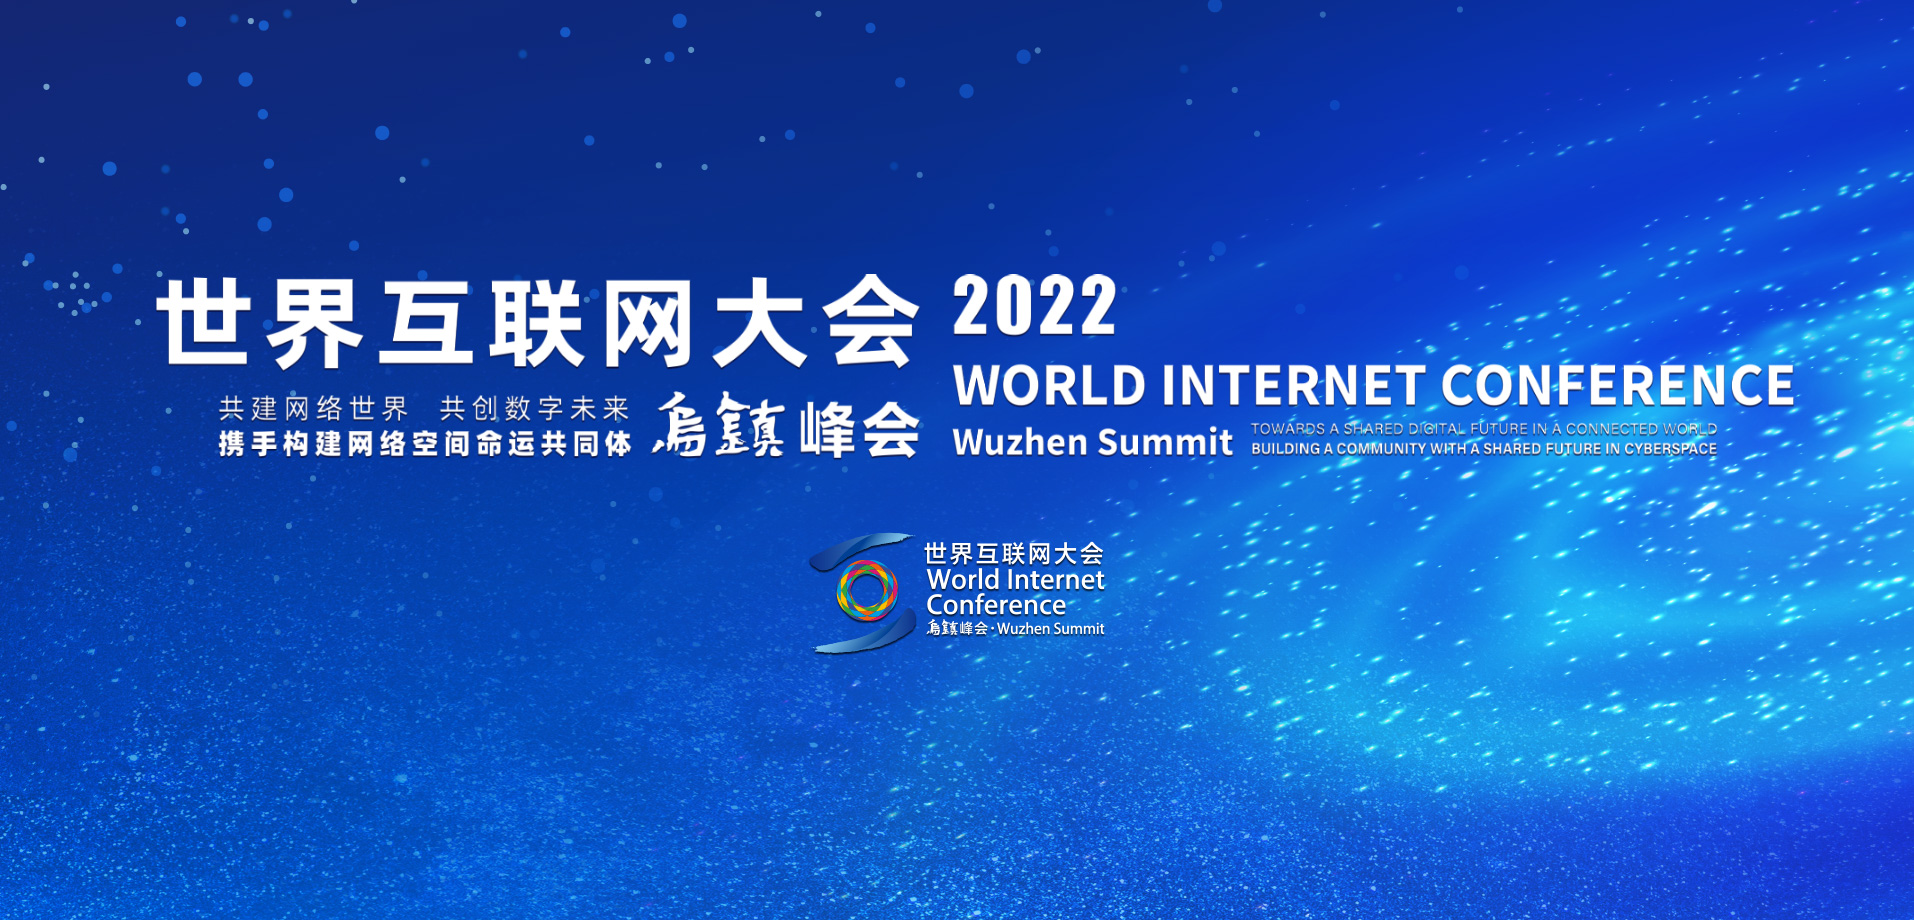 Xi sends congratulatory letter to 2022 World Internet Conference Wuzhen Summit